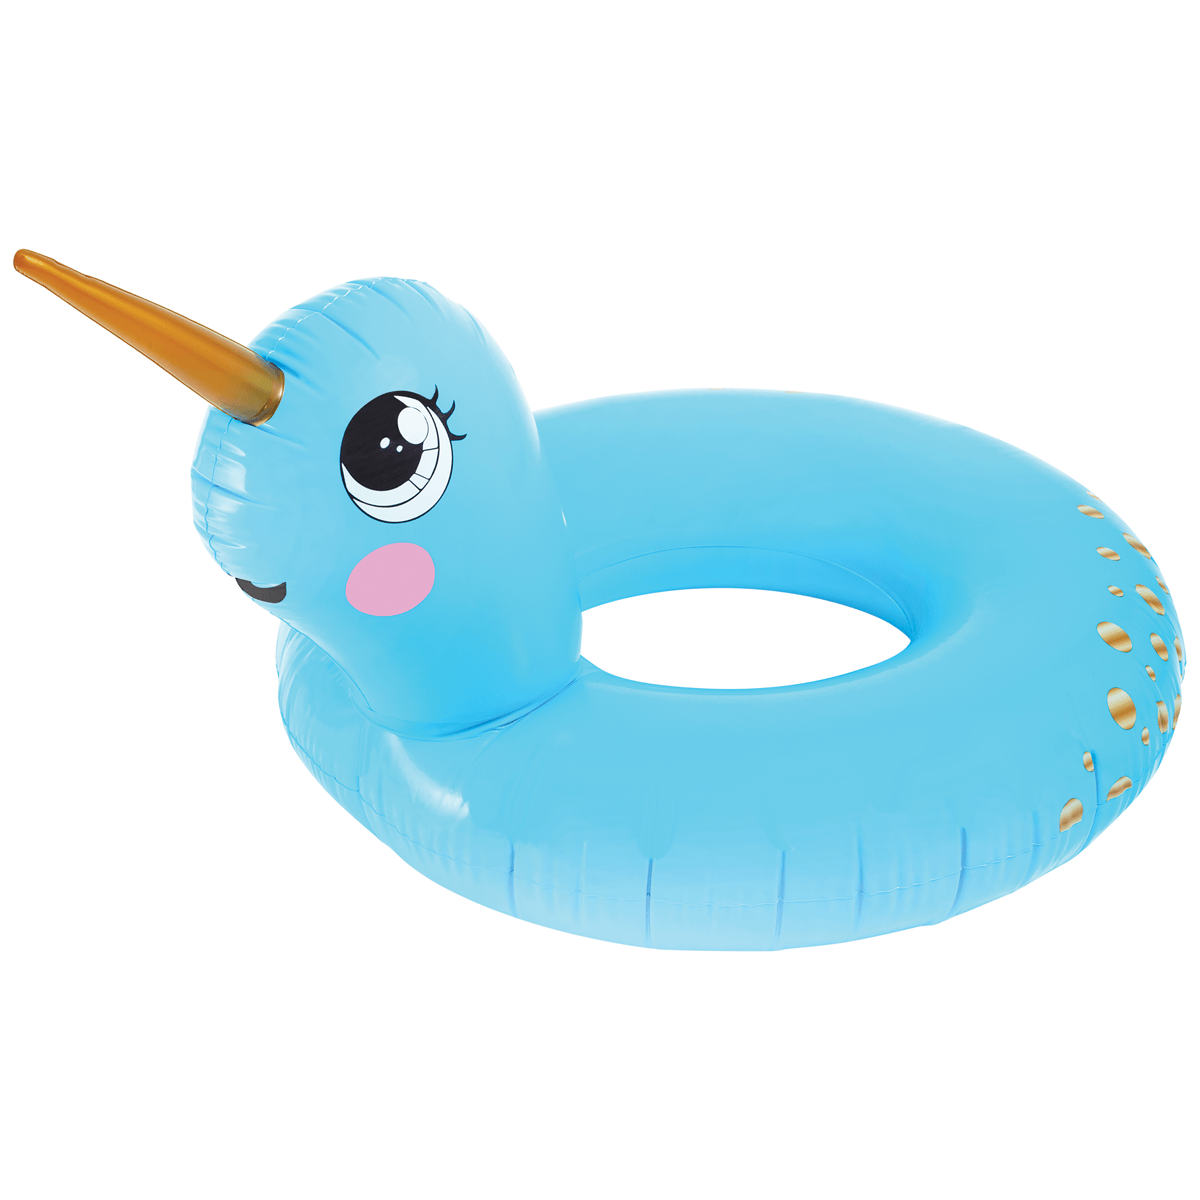 Inflatable Giant 90cm Pool Toy - Swim Ring